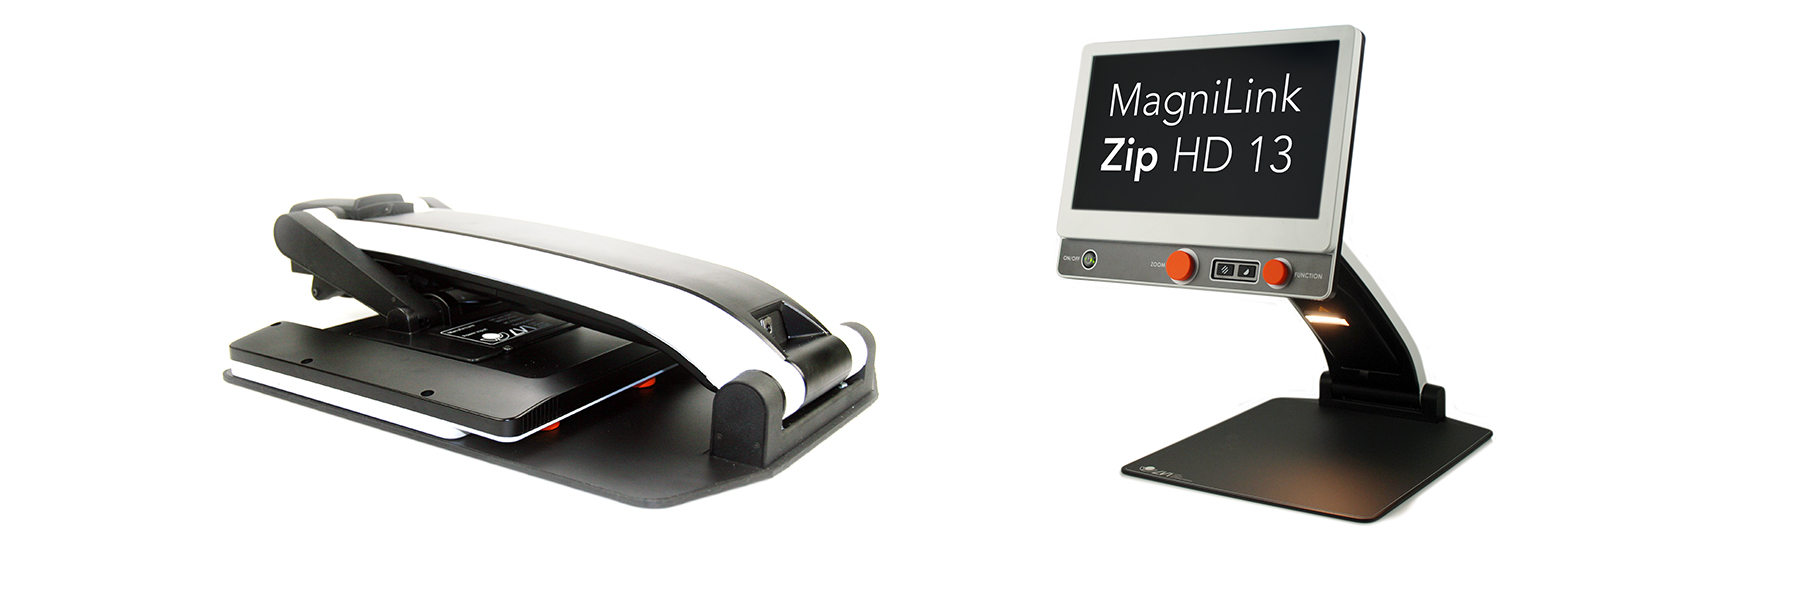 Abbildung des MagniLink Zip Full HD